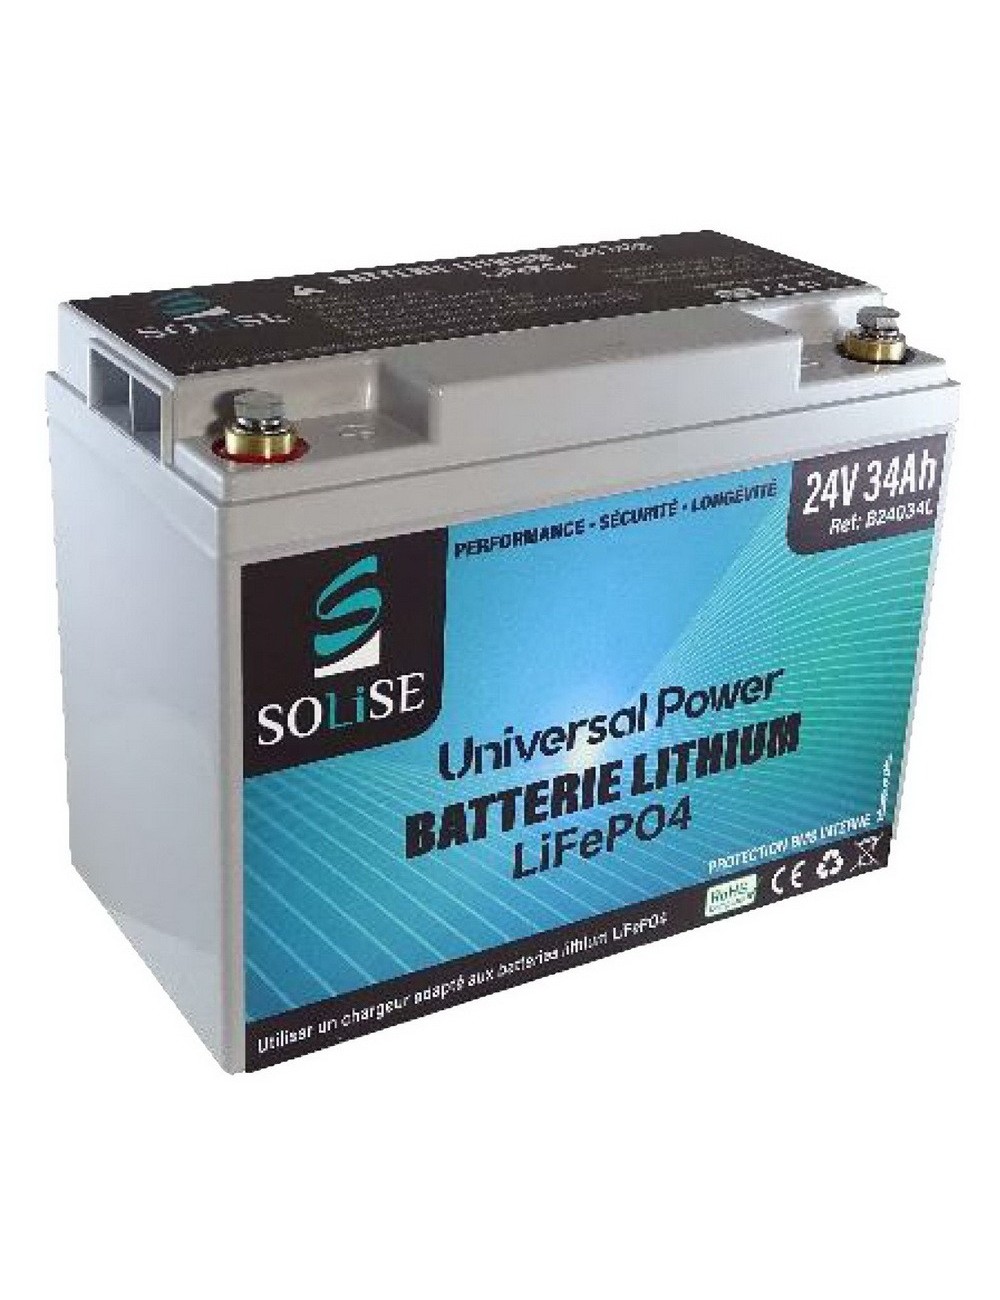 credit handelaar Terugroepen RNS B24034L (B24034L) LiFePO4 Batterij 24V Solise (24V - 34Ah) | Mister  Battery